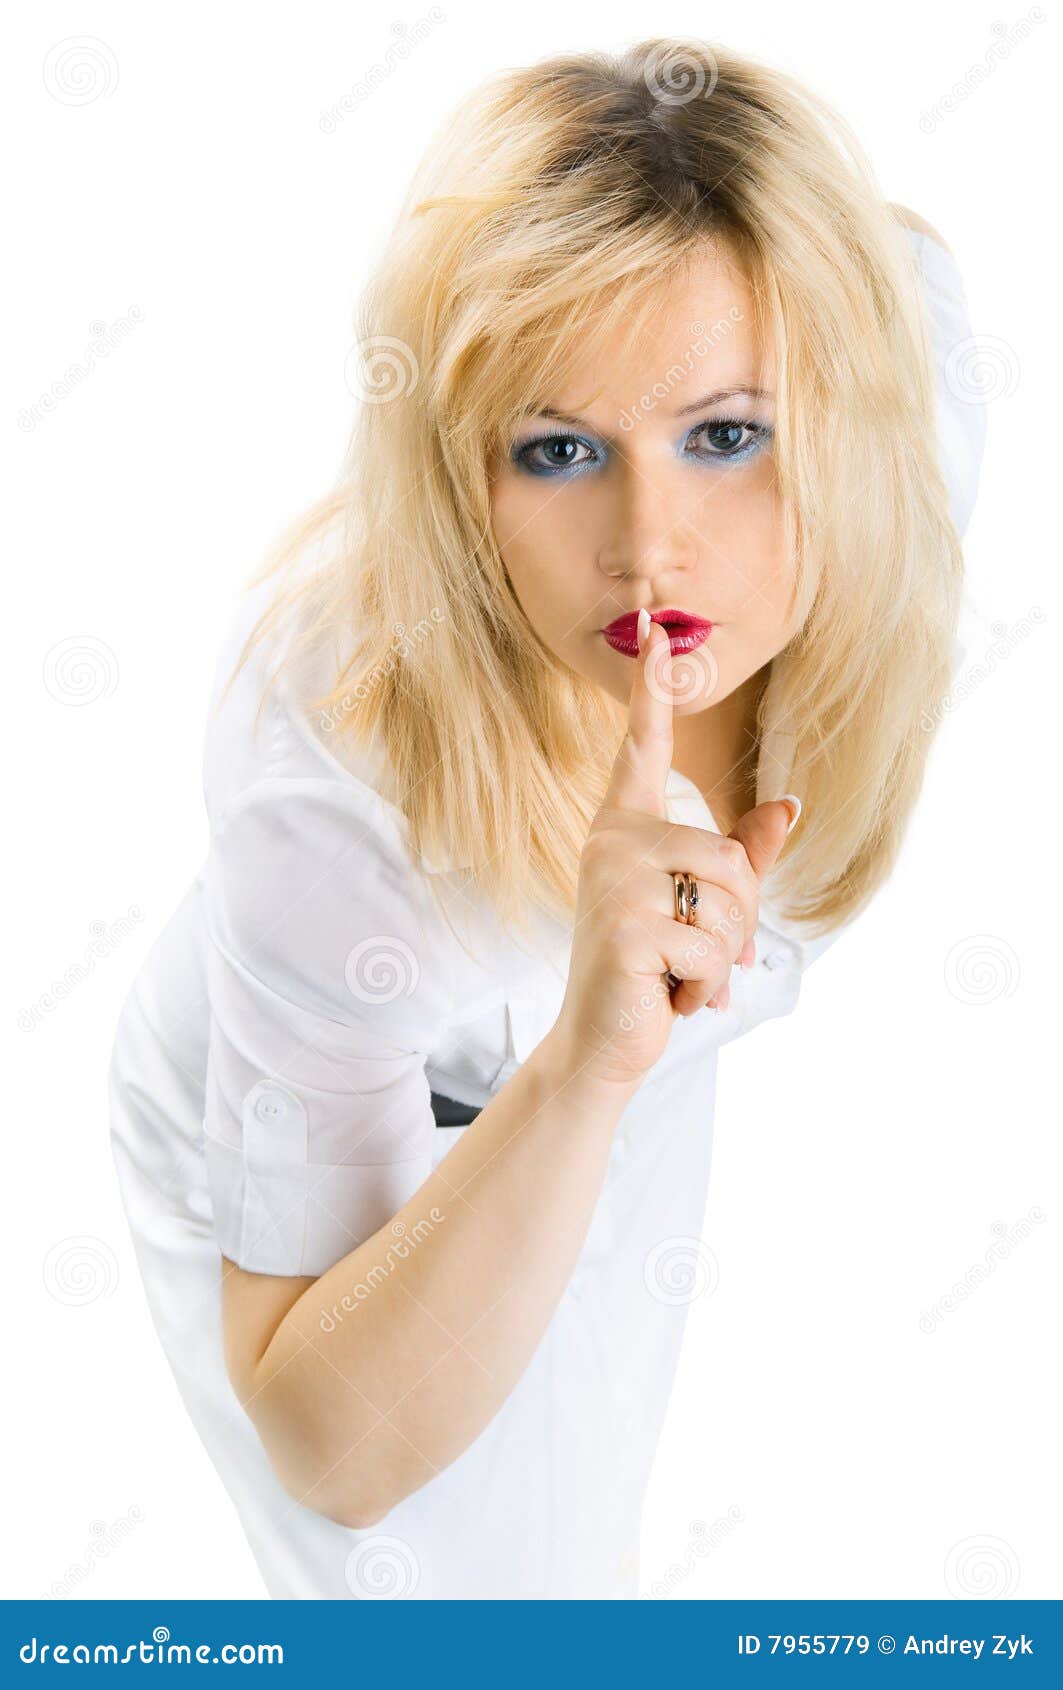 secret. woman shows hush